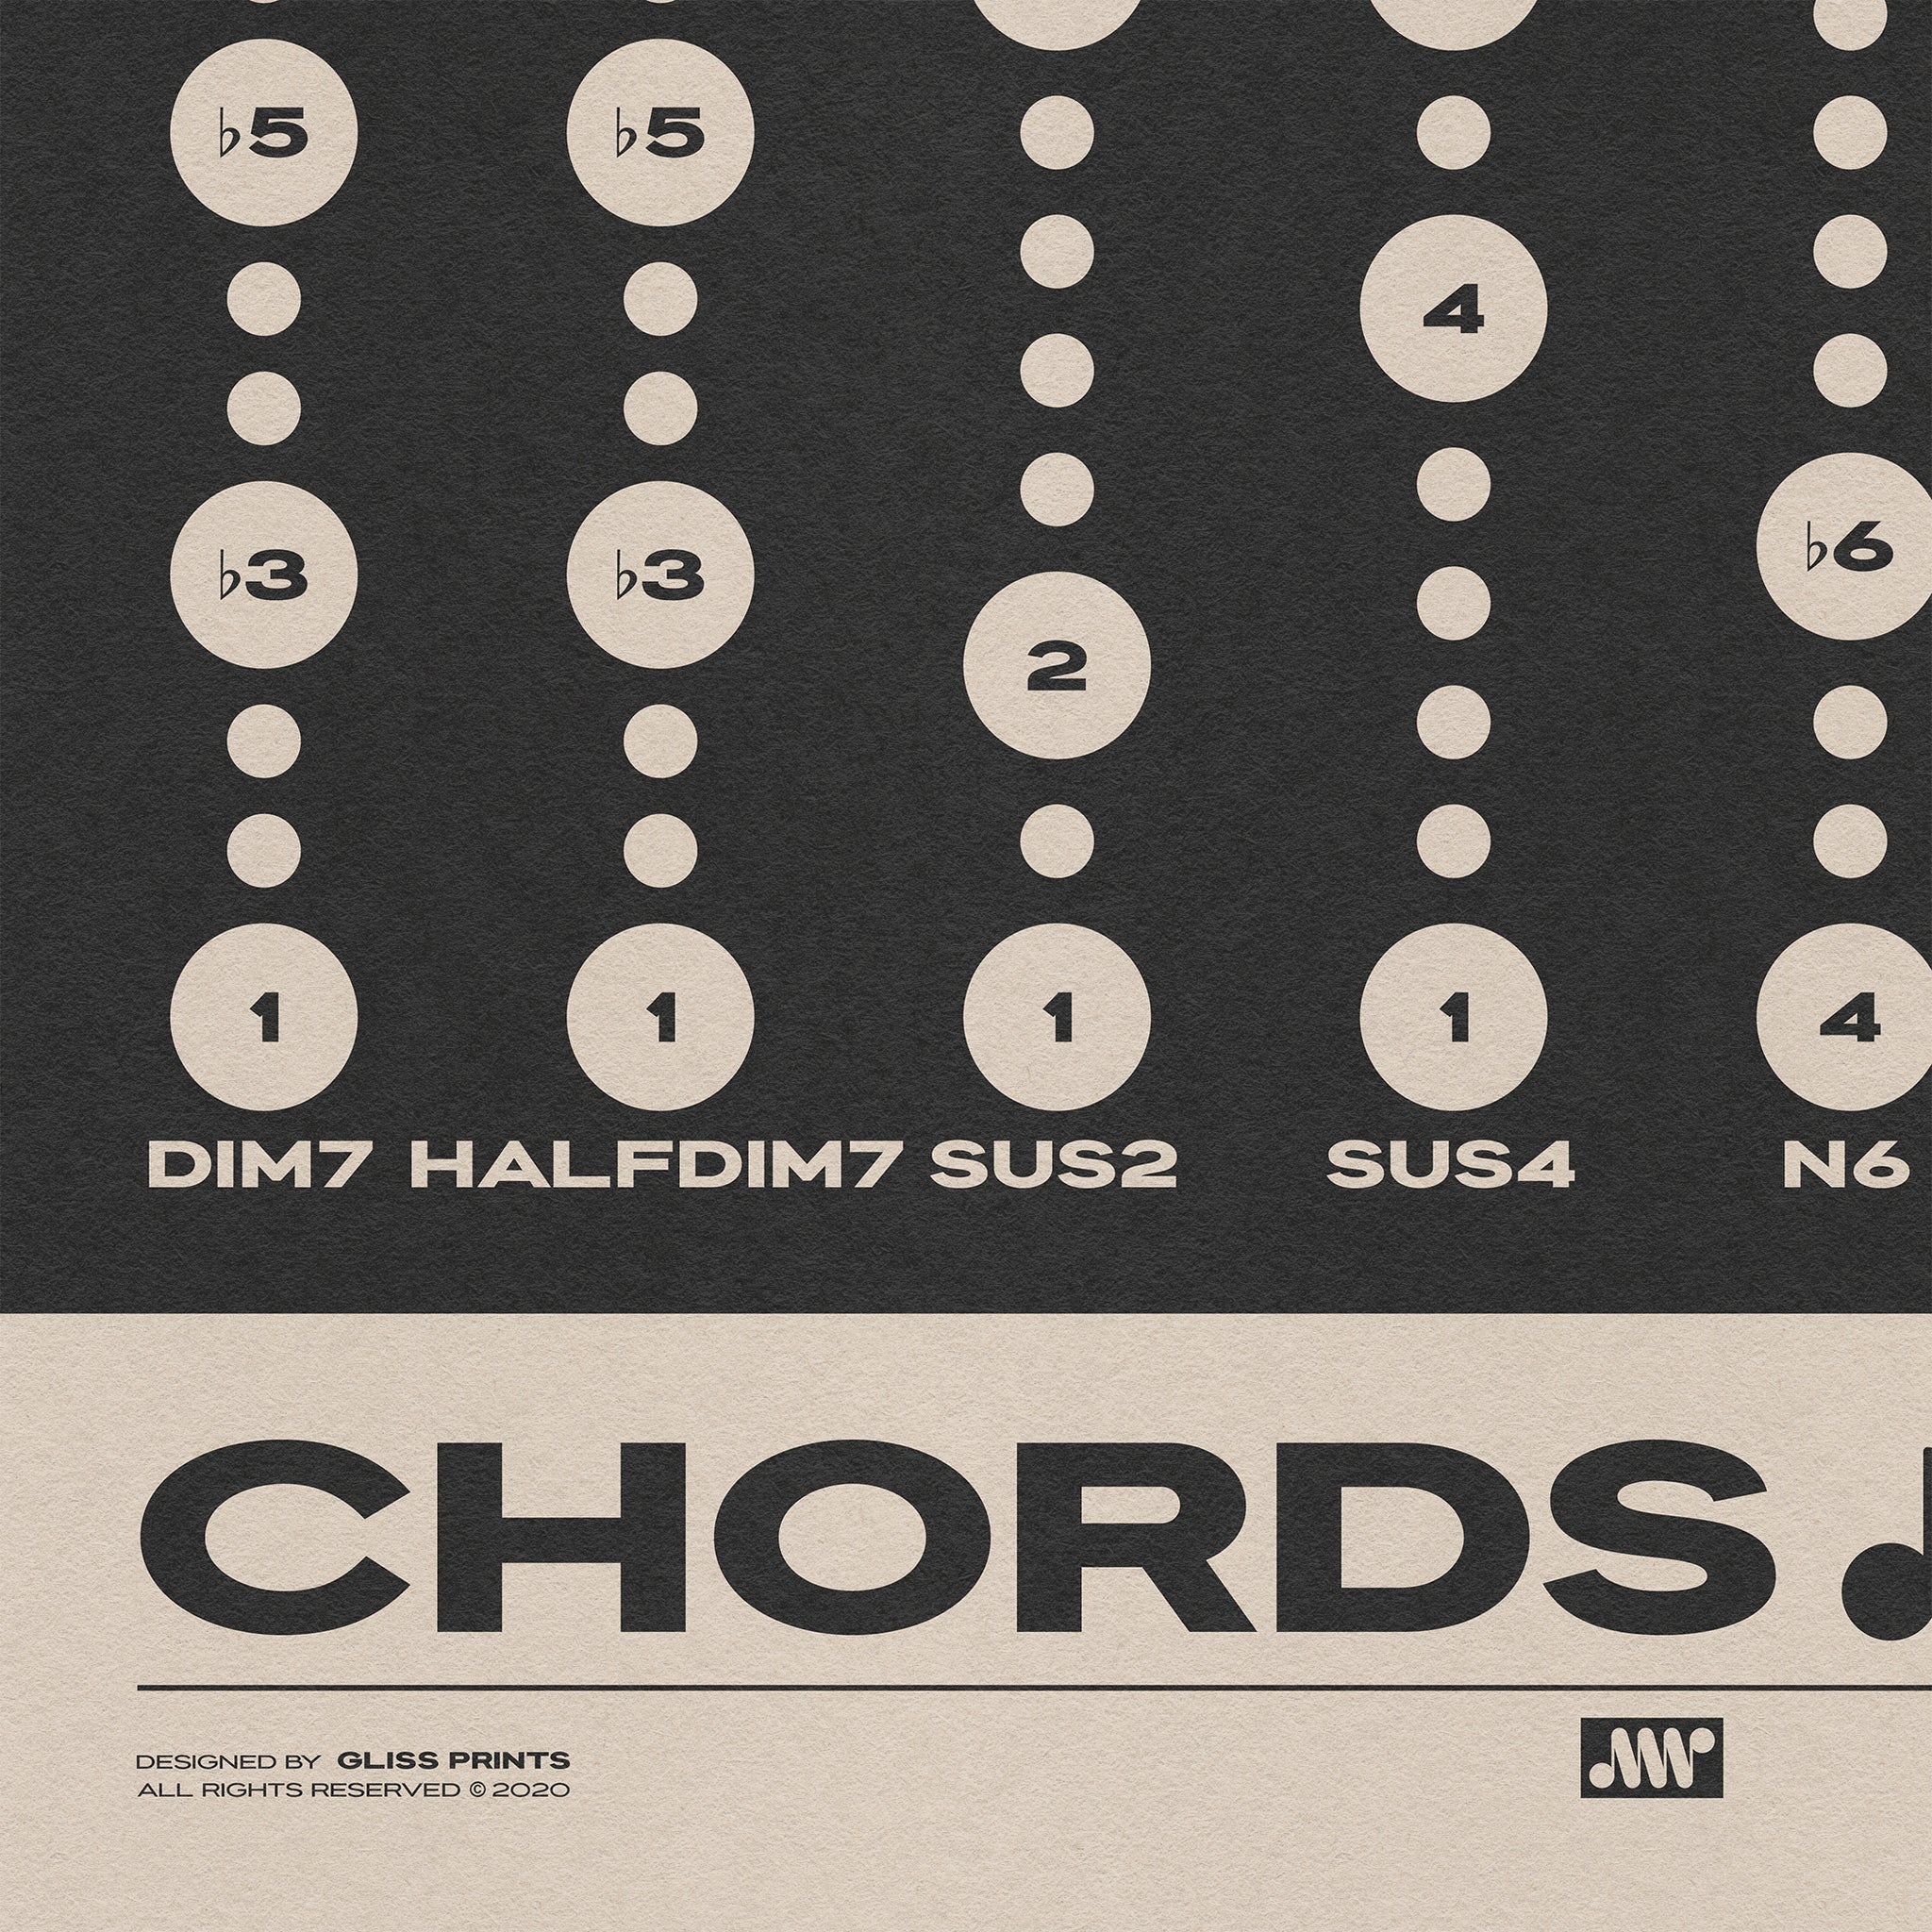 Music Chord Types Poster, Black